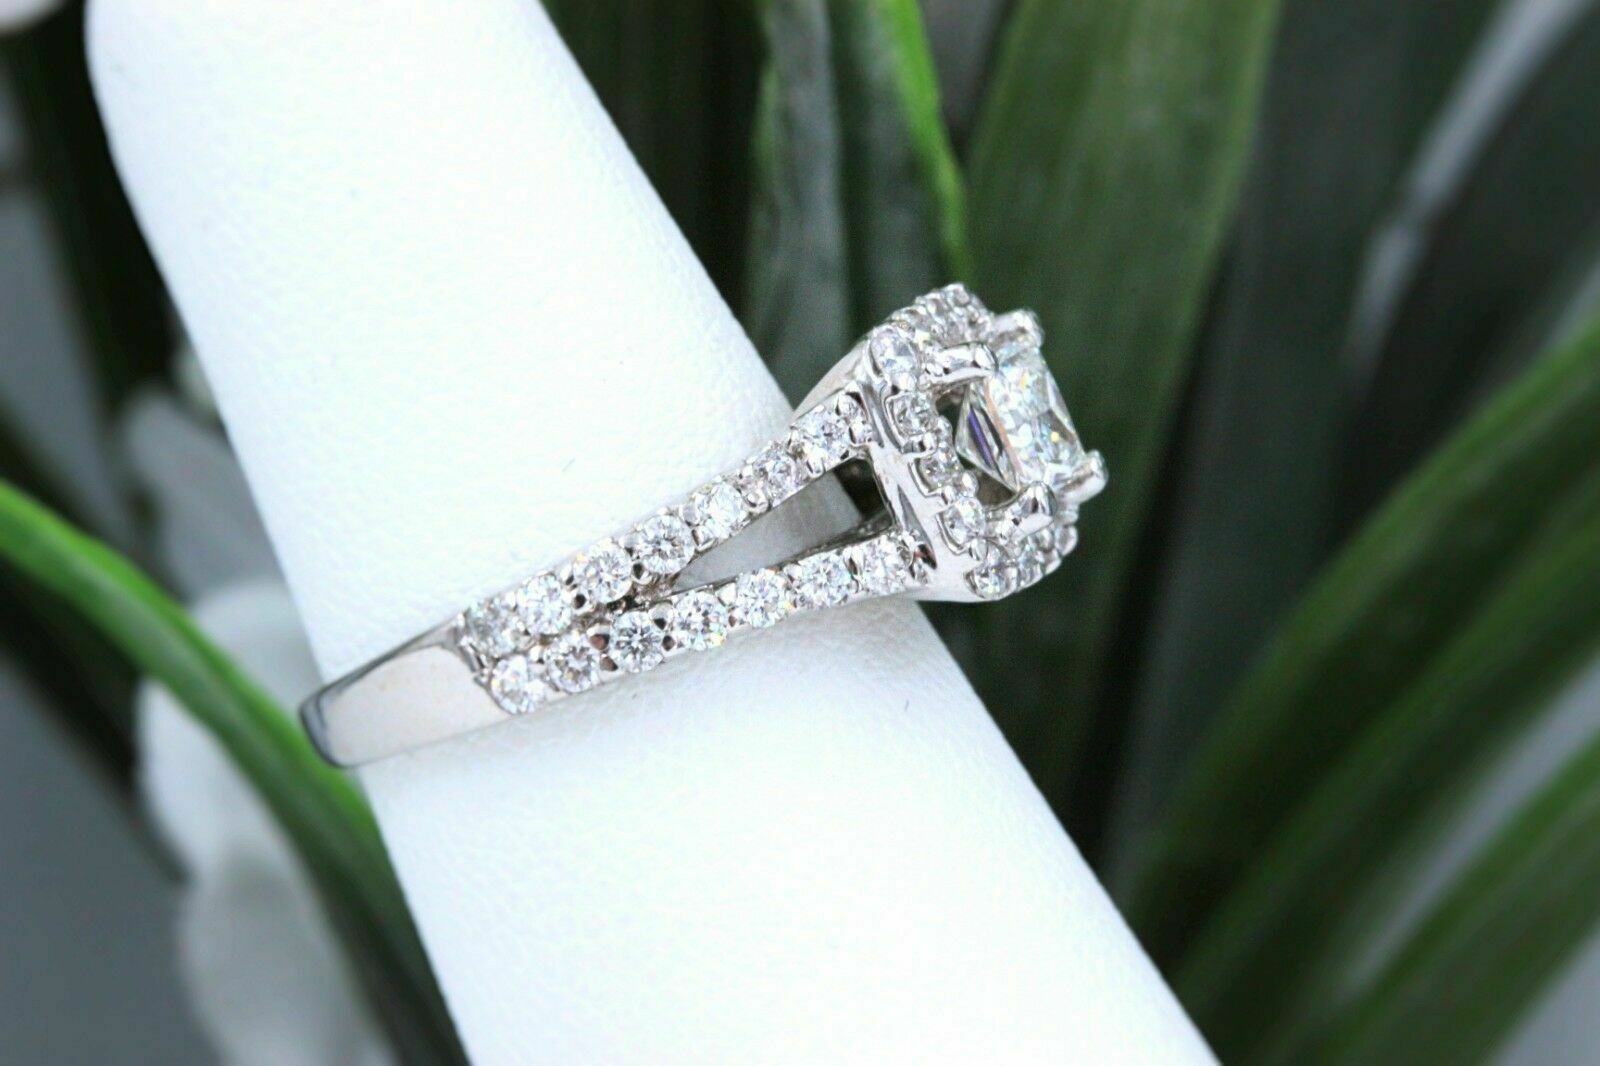 Diamond Accent Semi-Mount Engagement Ring